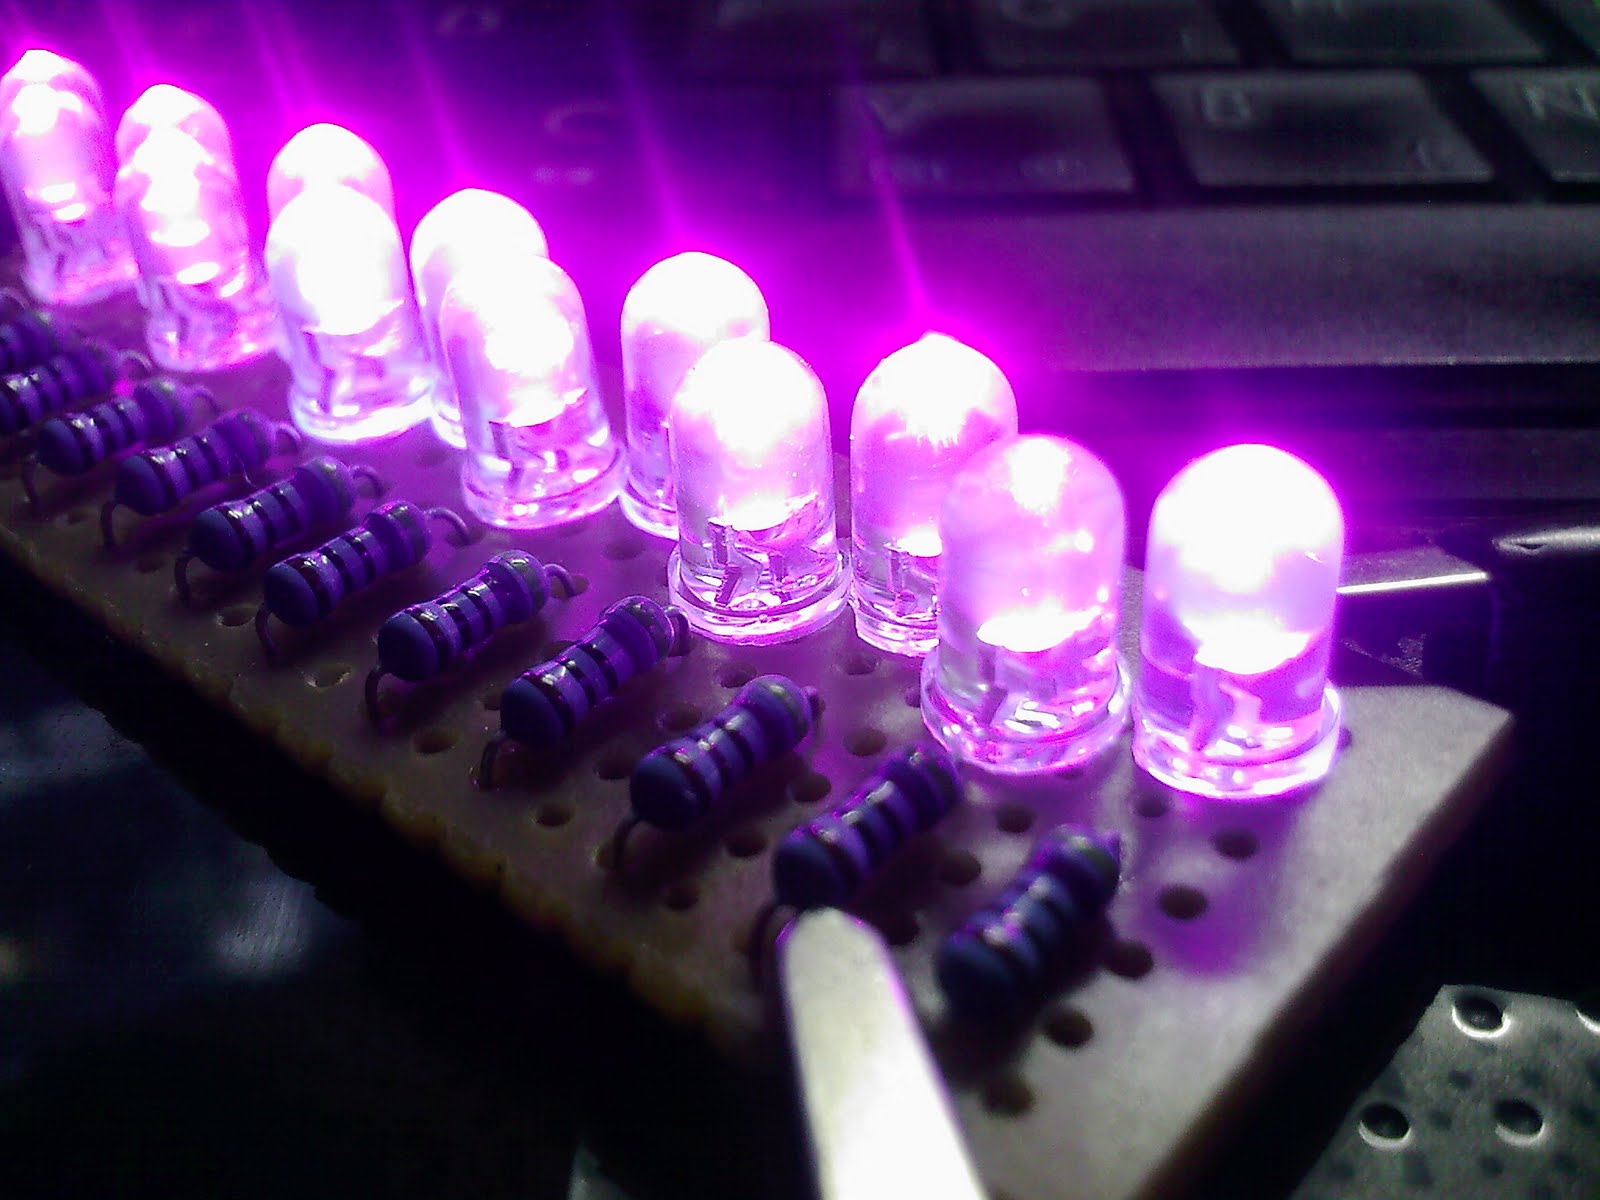 Hacktuber: Led UV Lamp